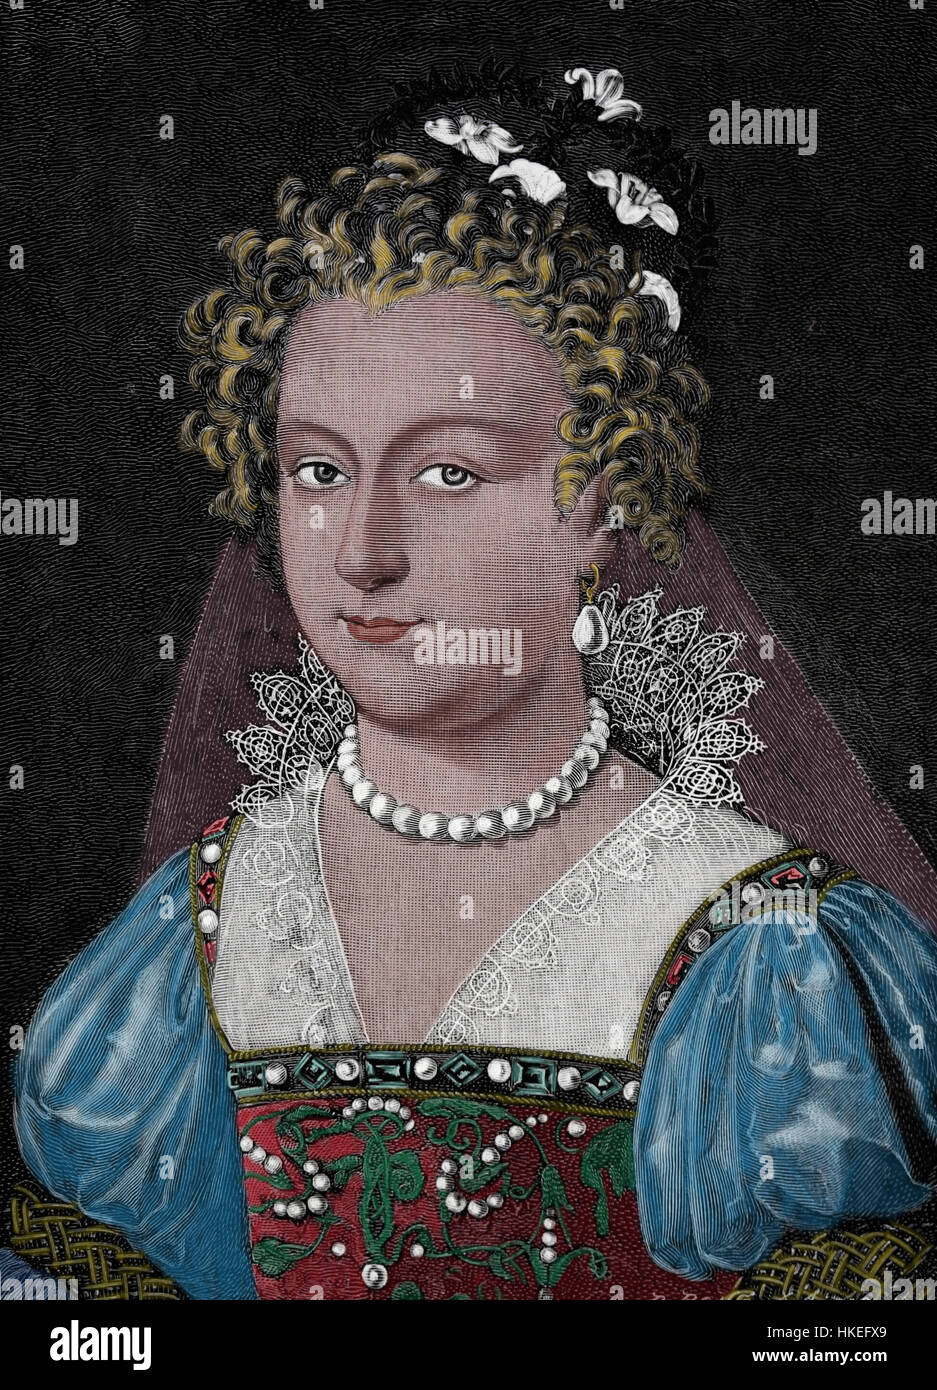 Isabel I de Inglaterra (1533-1603). Reina de Inglaterra e Irlanda. Dinastía Tudor. Grabado del siglo XIX. Foto de stock